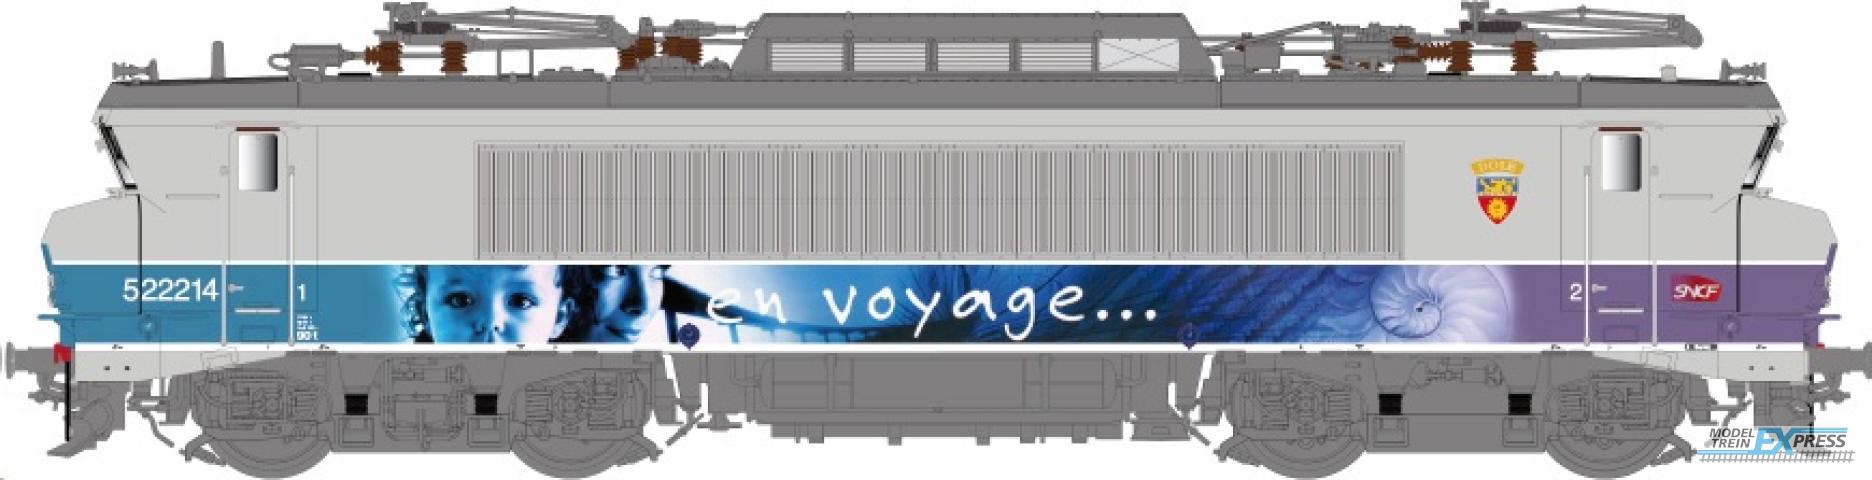 LS Models 10555 BB 22200,grijs/paars, En Voyage, carmillon logo, front nummer, kleine cabine, blazoen Dole  /  Ep. V-VI  /  SNCF  /  HO  /  AC  /  1 P.